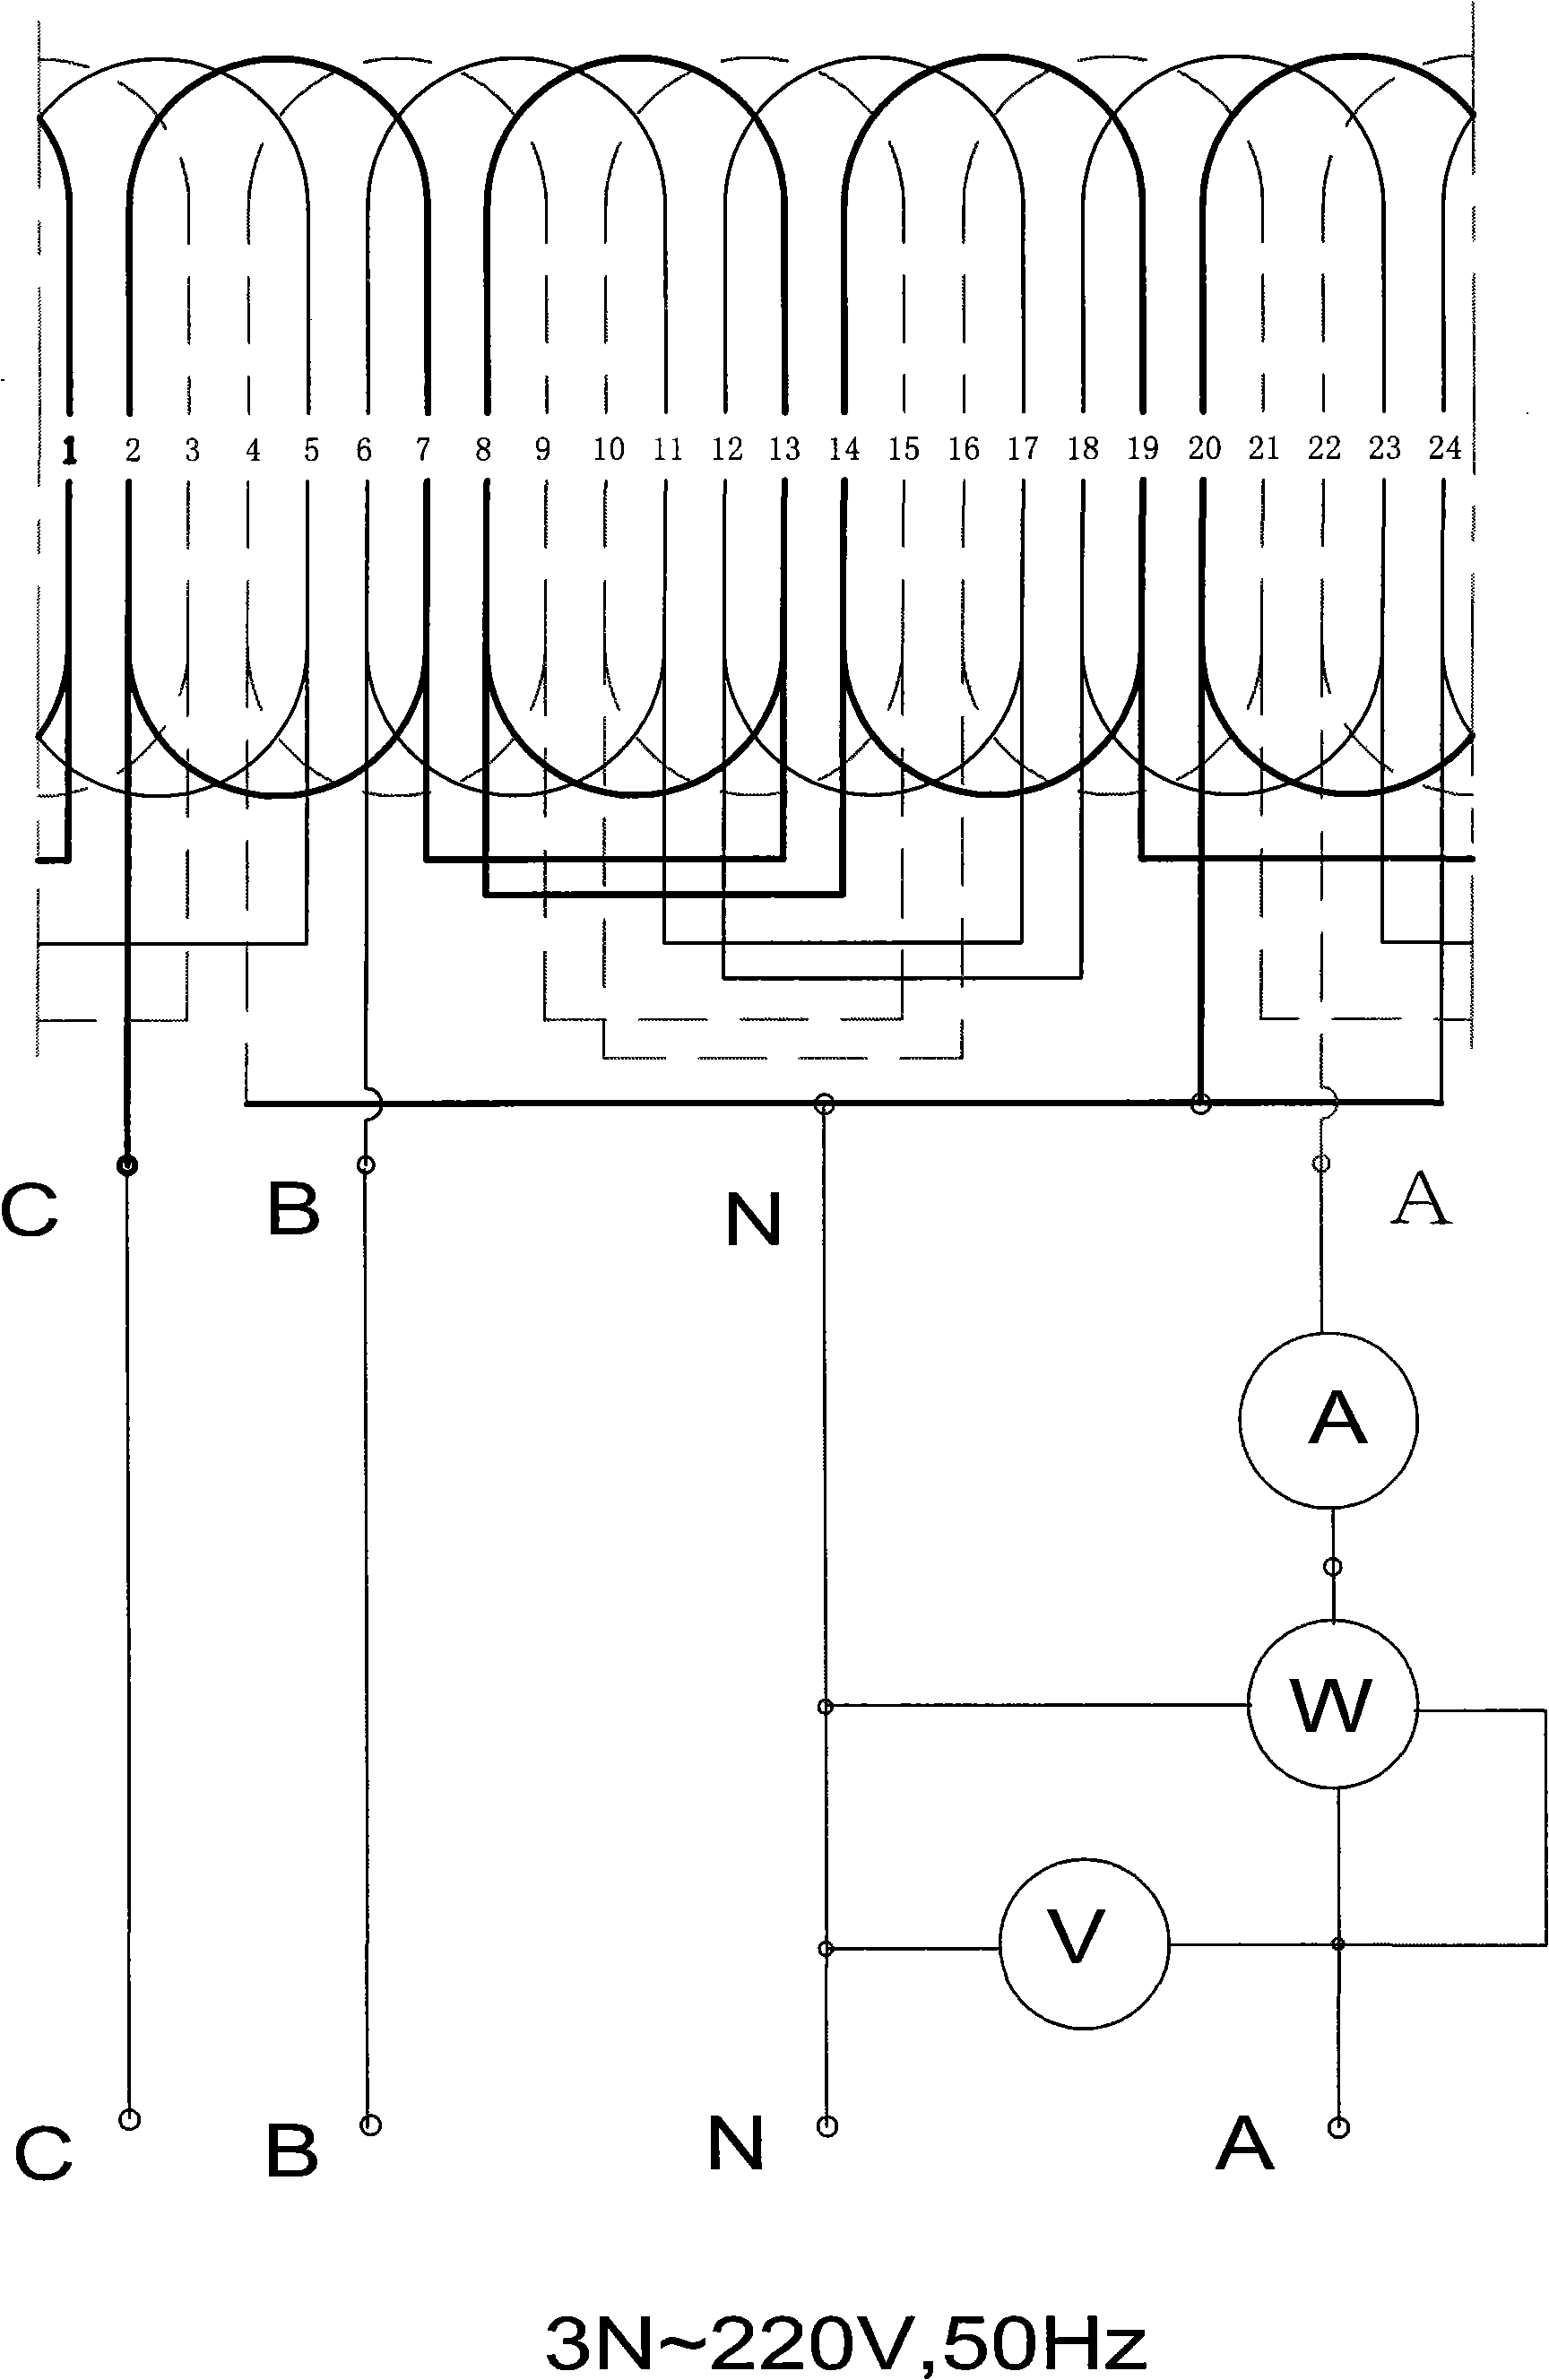 Electromagnetic design method for Y-wiring single phase capacitance run motor